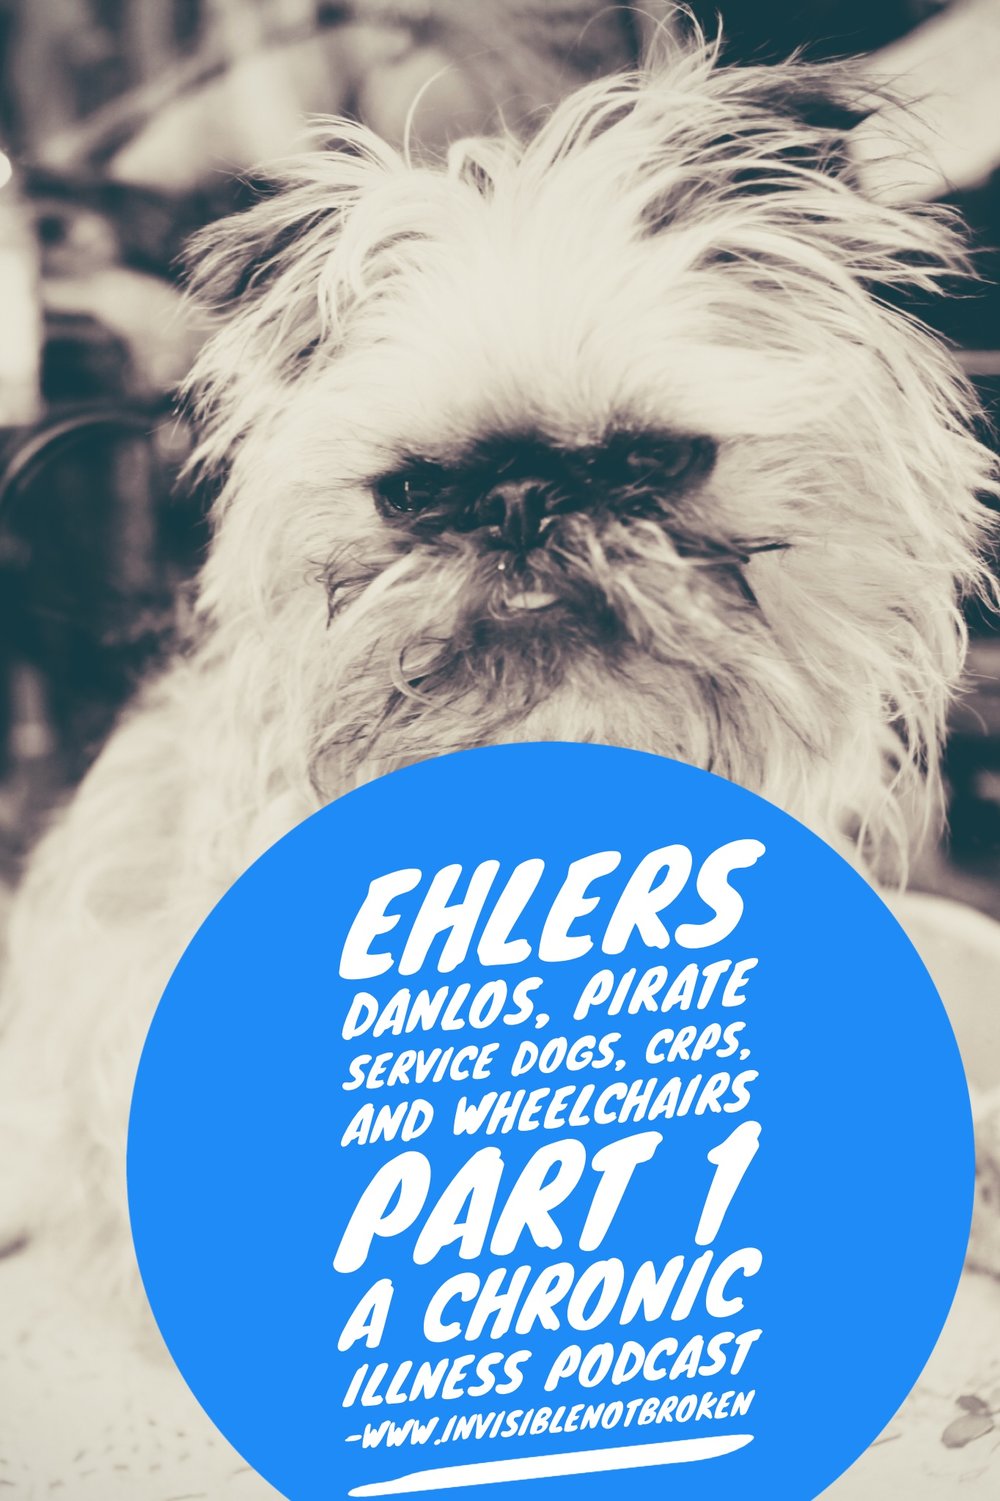 ehlers-danlos-crps-service-dog-wheelchair-chronic-illness-blog.jpg